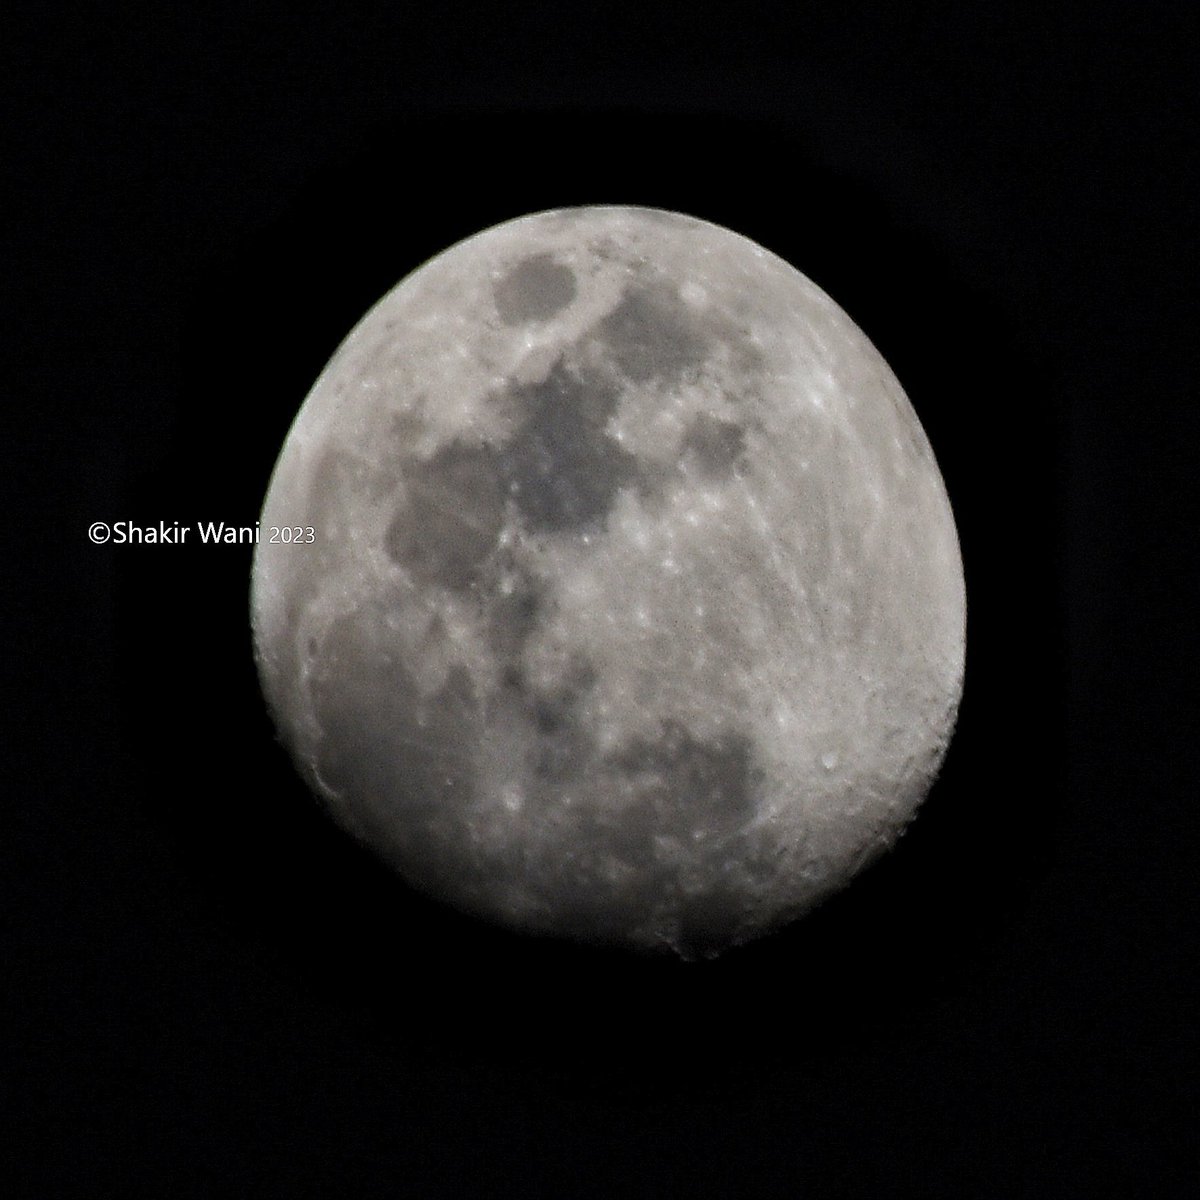 Just a Click #Moon #moonlight #moonlovers #shakirwani #india #kashmir #indiaclicks #kashmirclicks #indiaphotos #kashmirsky #kashmirinmylens #kashmirframes #kashmir #kashmirshots #nikonphotography #nikonindia #indiaphotography #instapix #youtubeindia #shakirwaniphotography